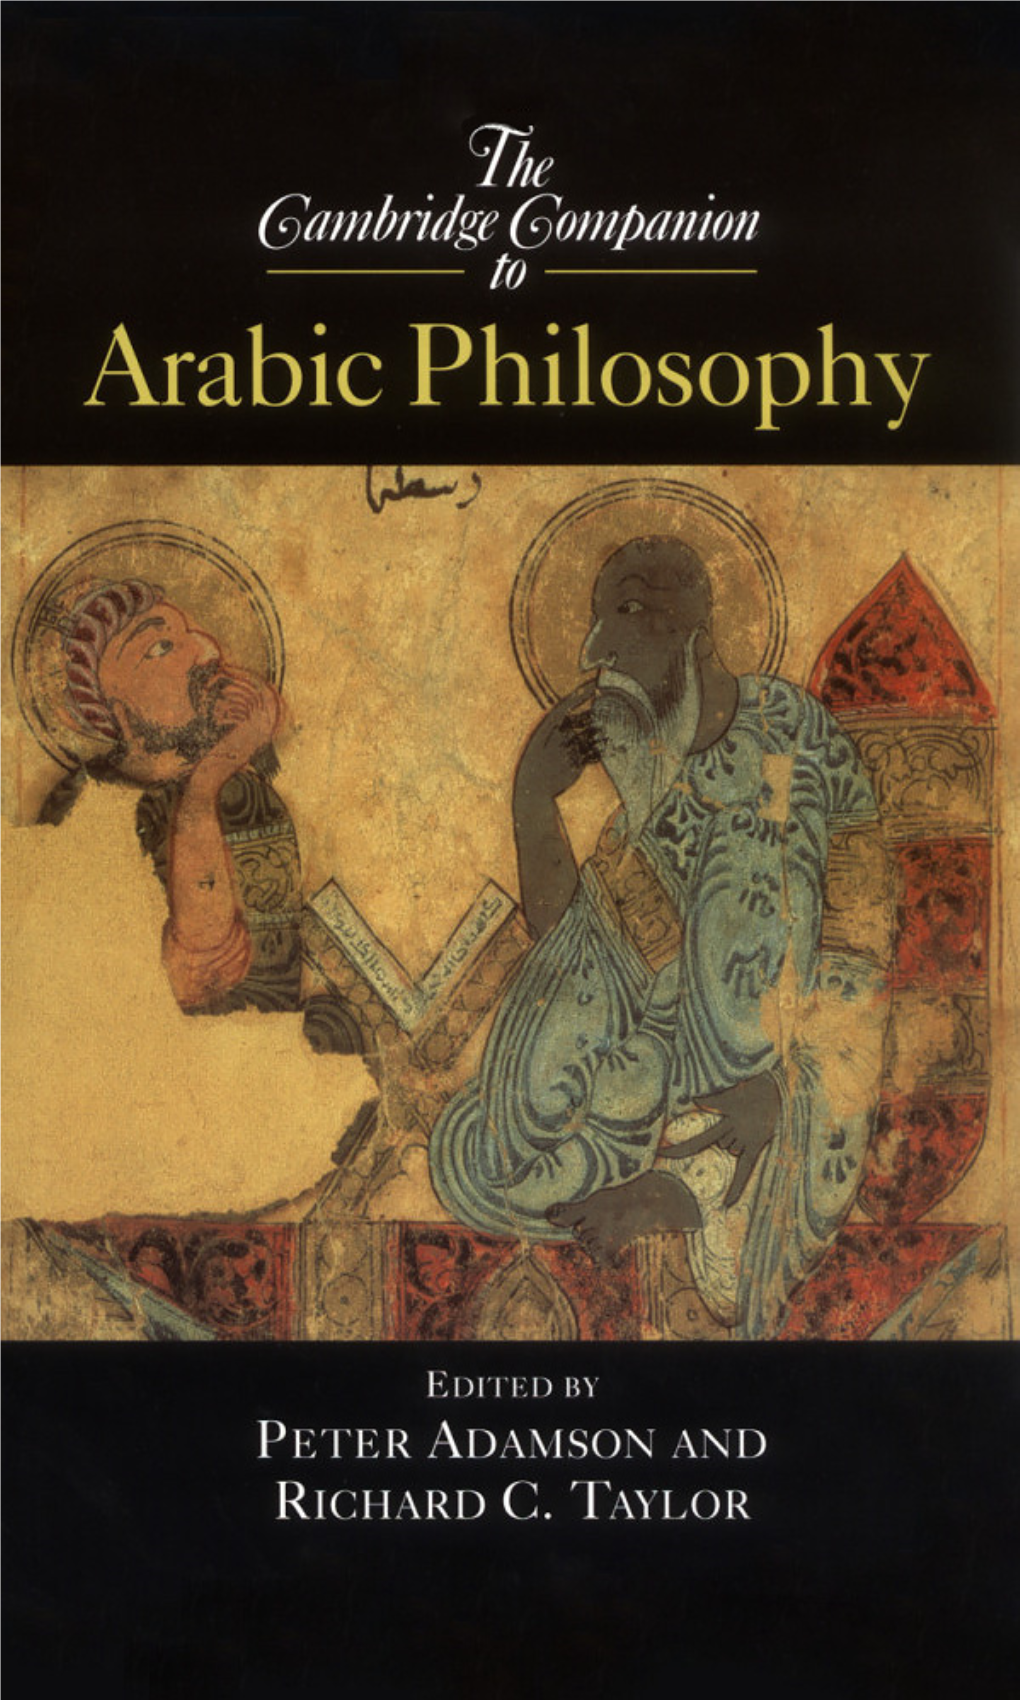 The Cambridge Companion to ARABIC PHILOSOPHY